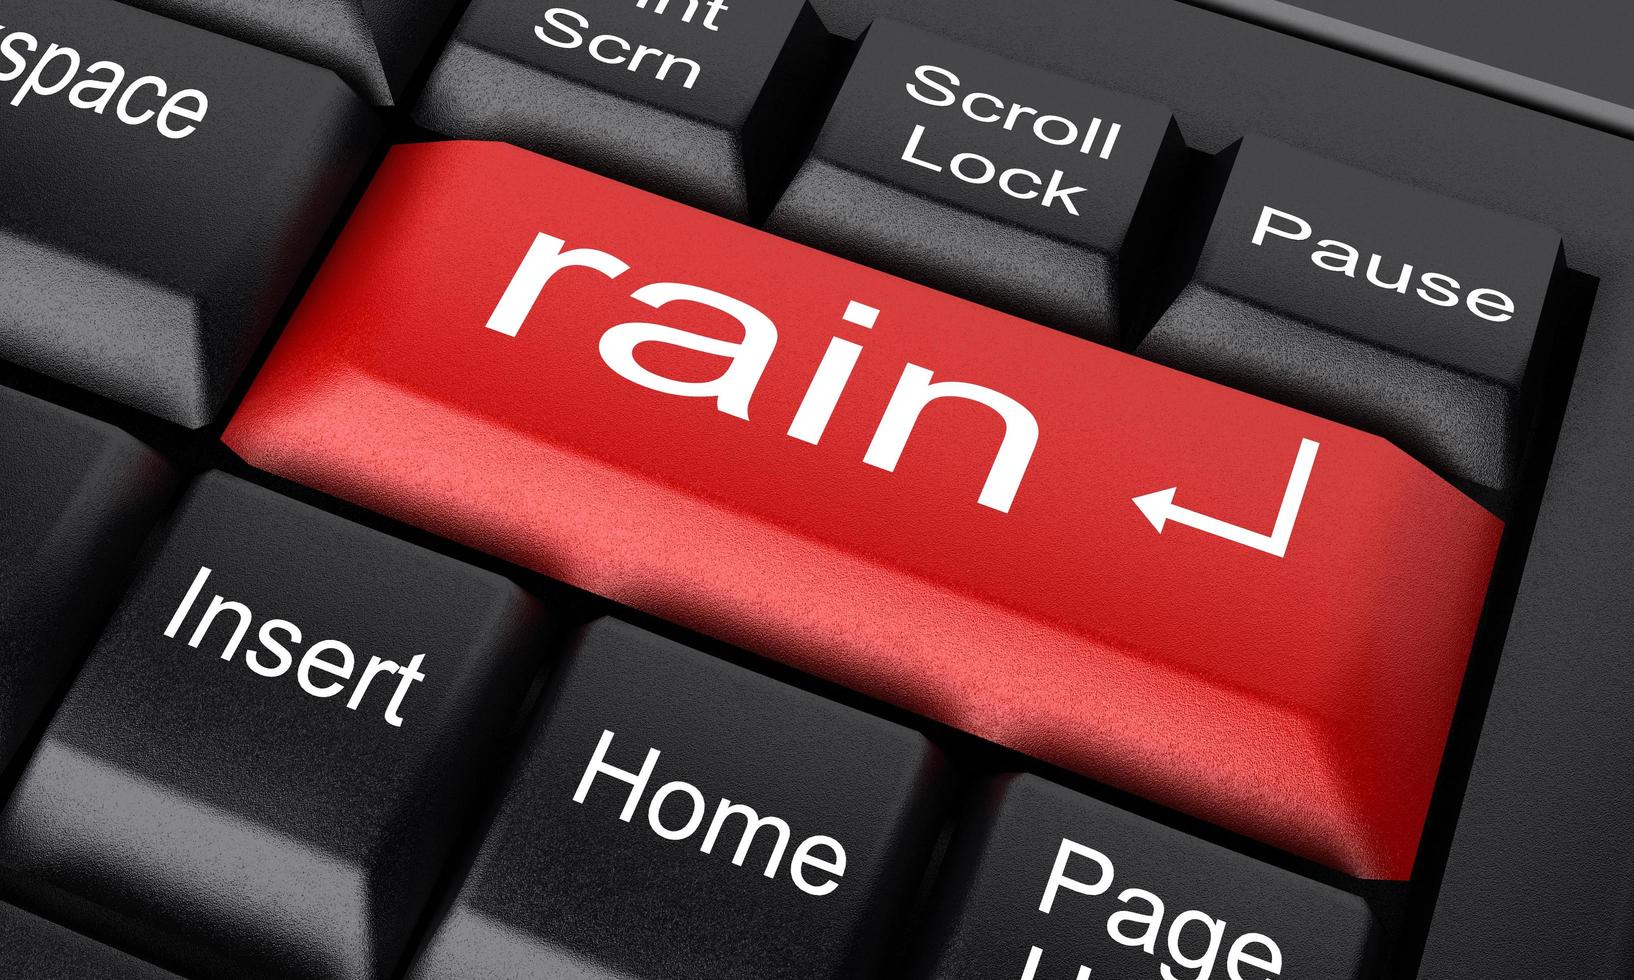 rain word on red keyboard button photo